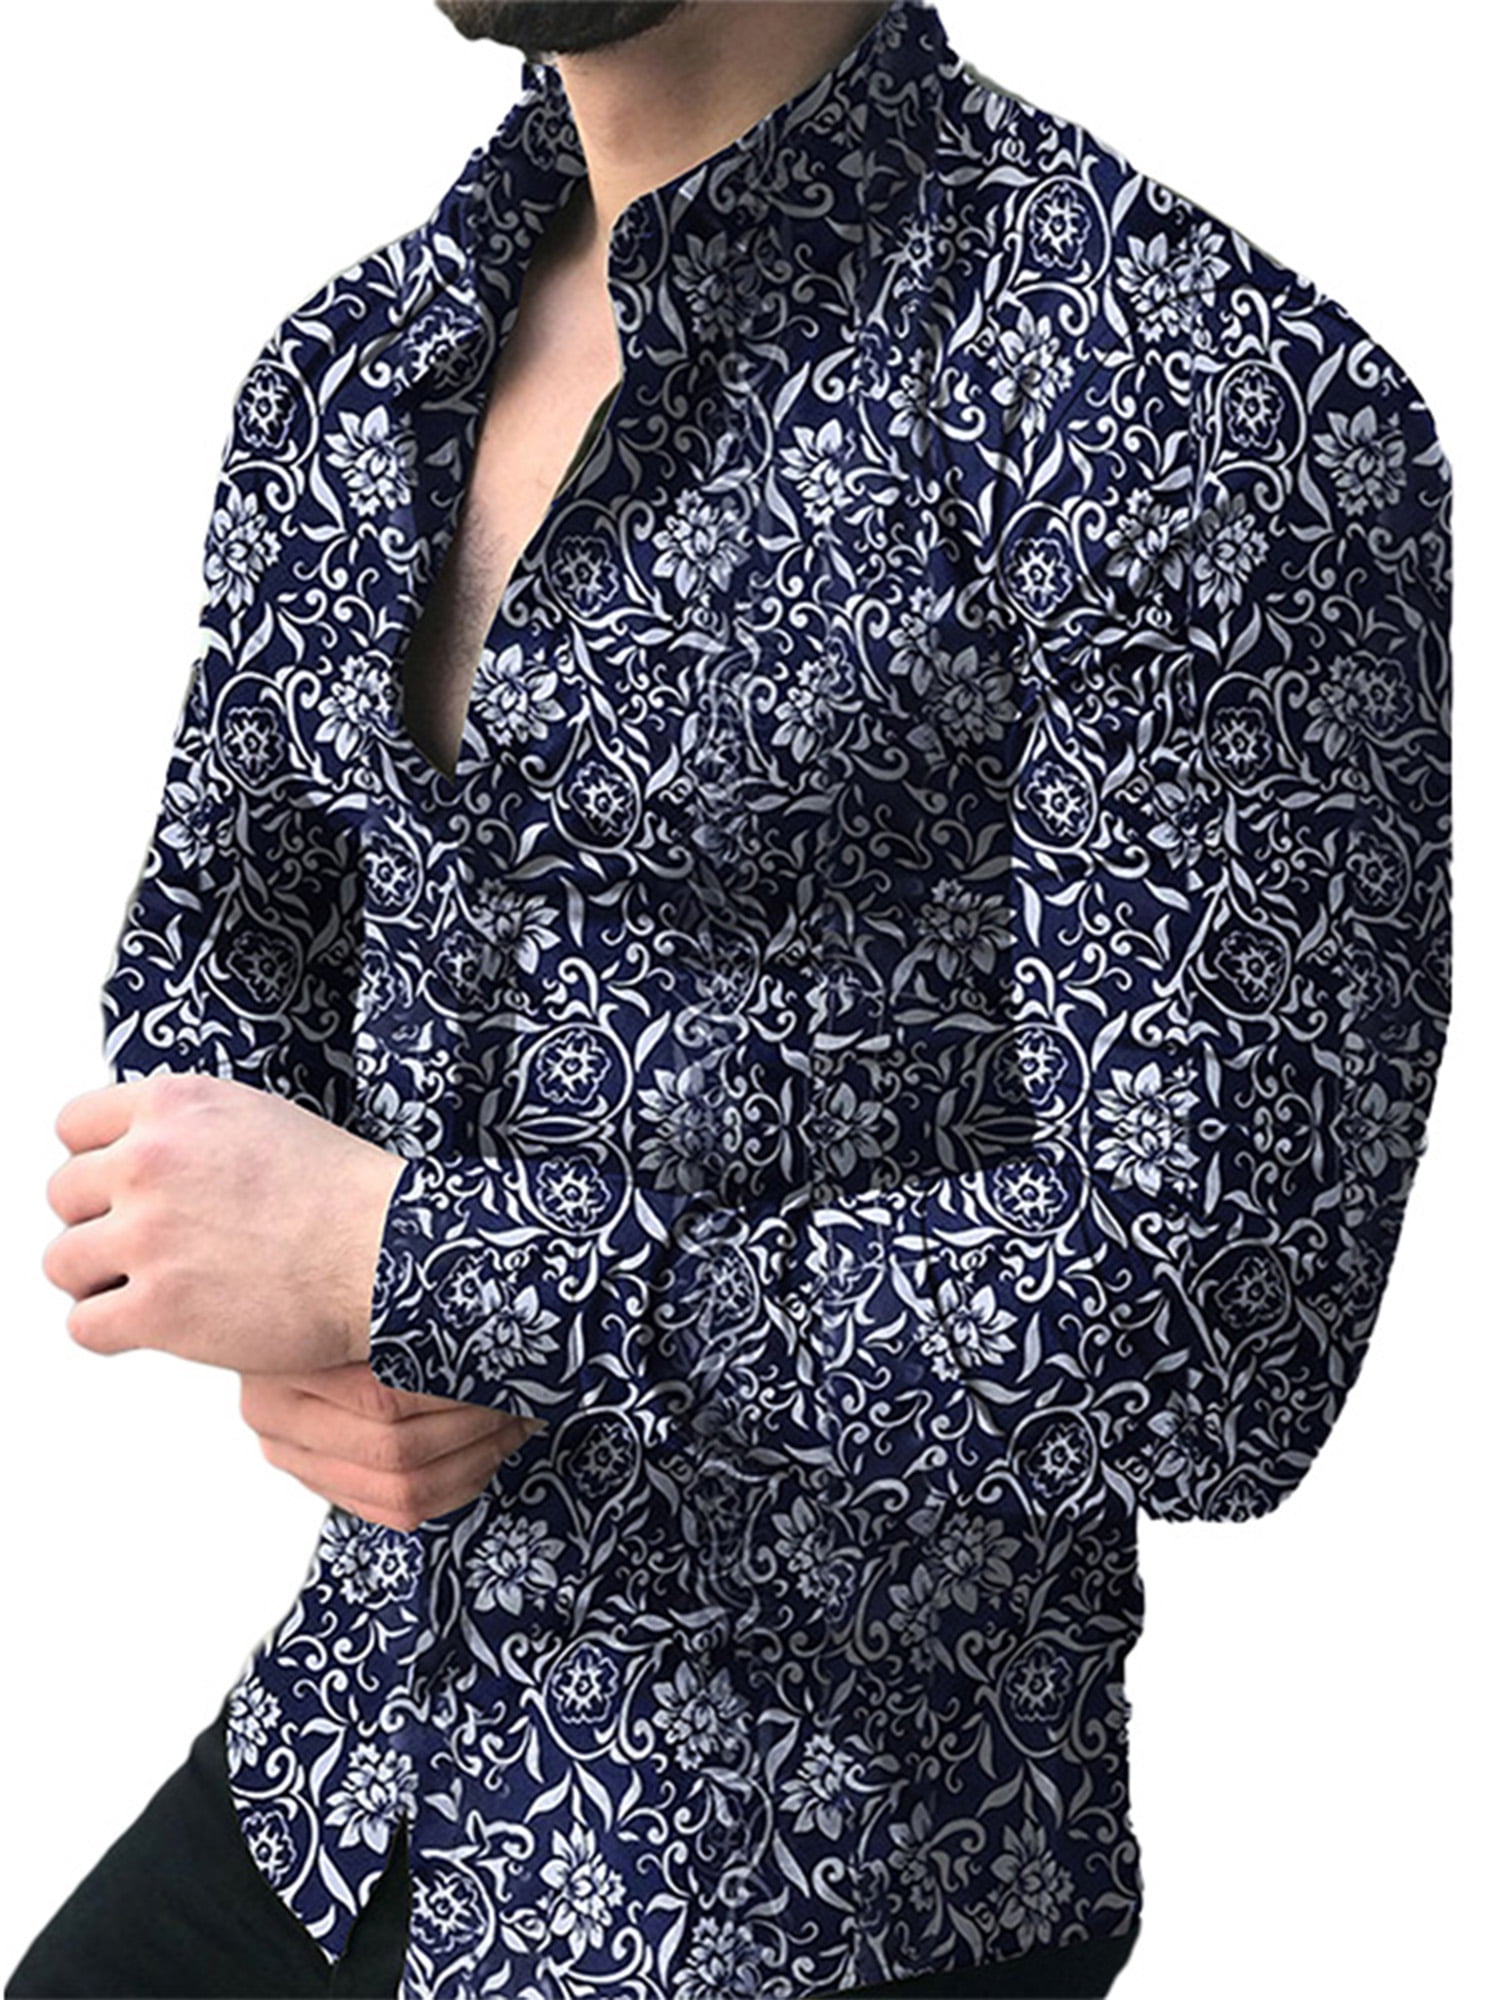 Long sleeve men's tops luxury floral formal casual slim fit dress shirt t-shirt